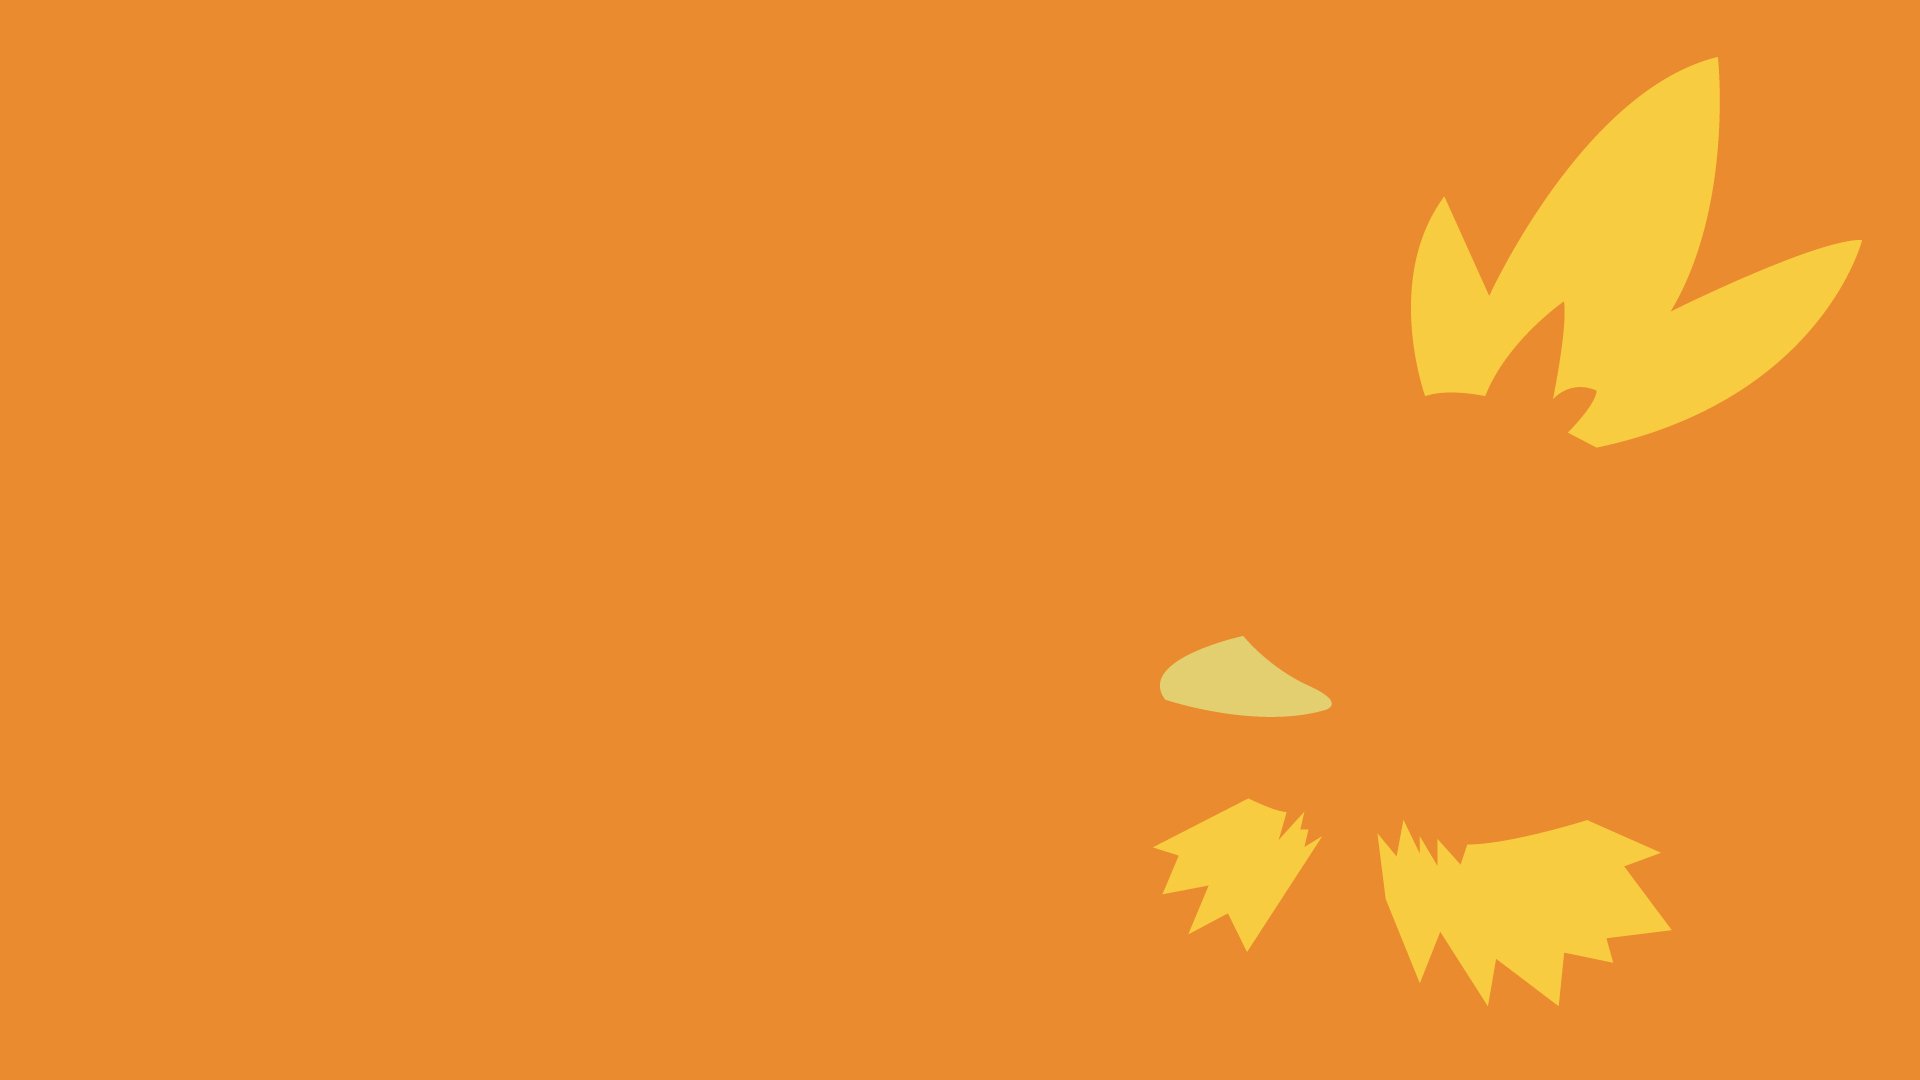 Download Vibrant Pokemon Fan Art Against a Tangerine Background Wallpaper